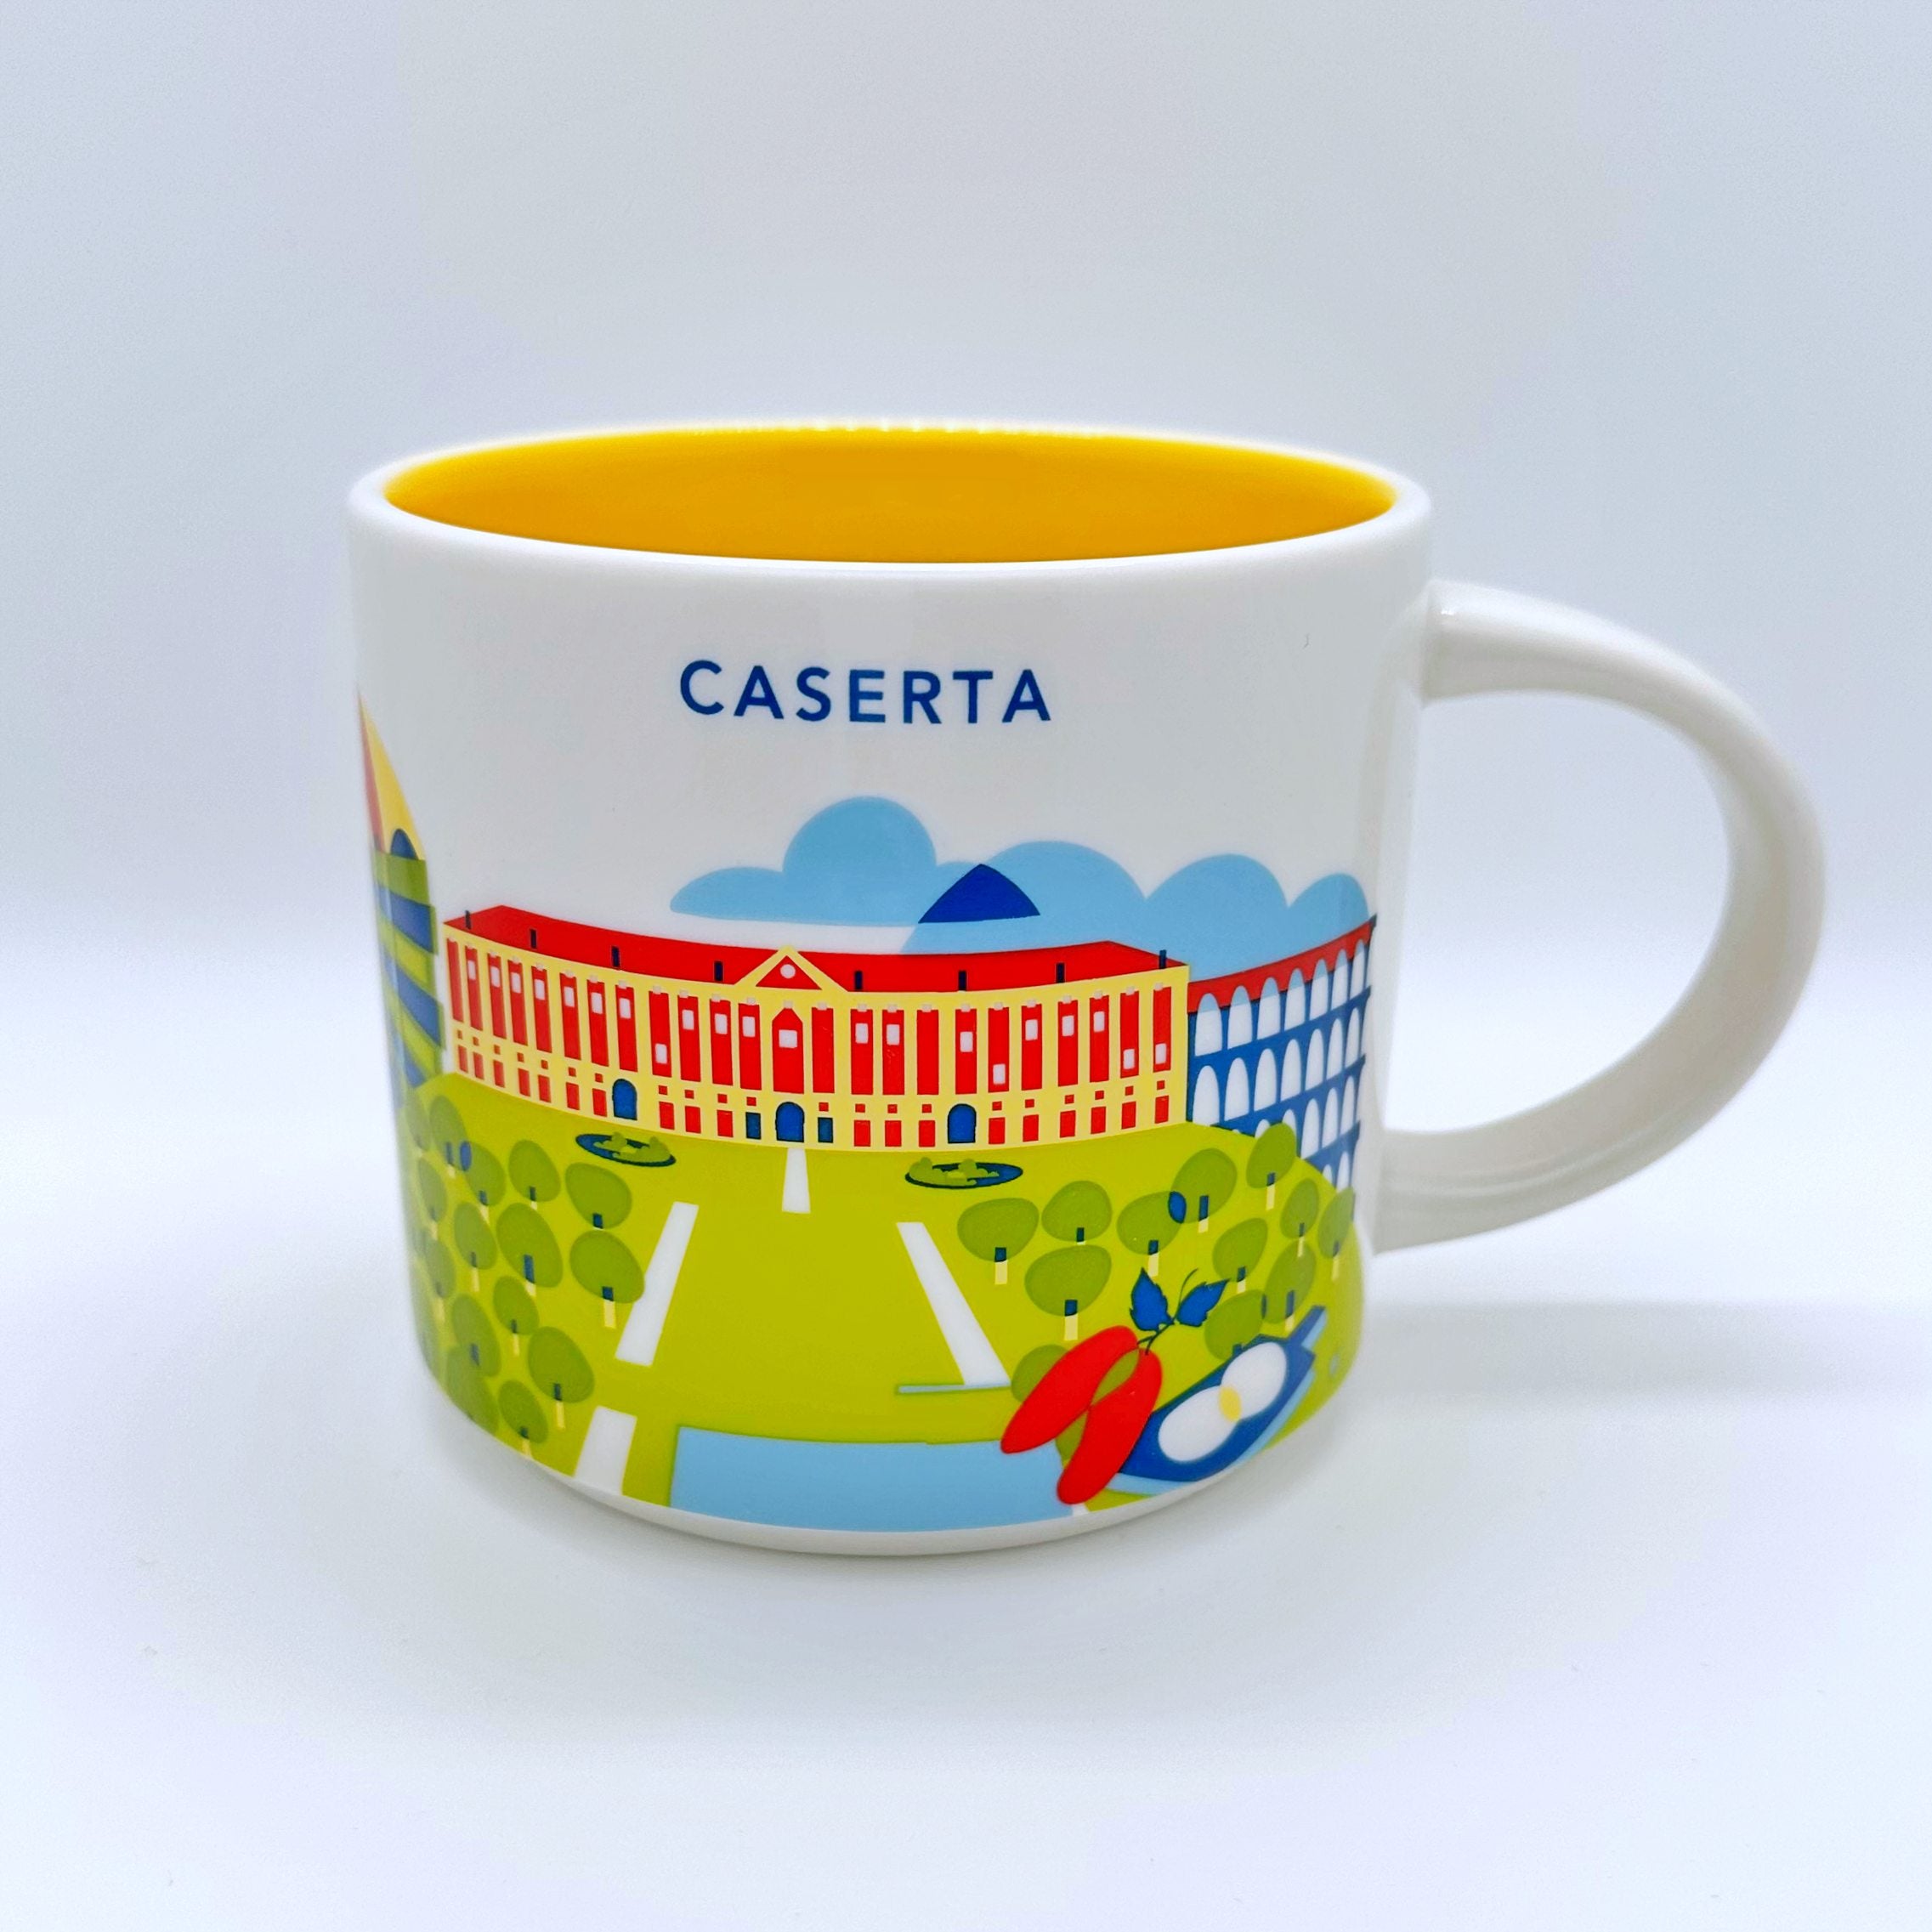 Caserta City Kaffee Tasse